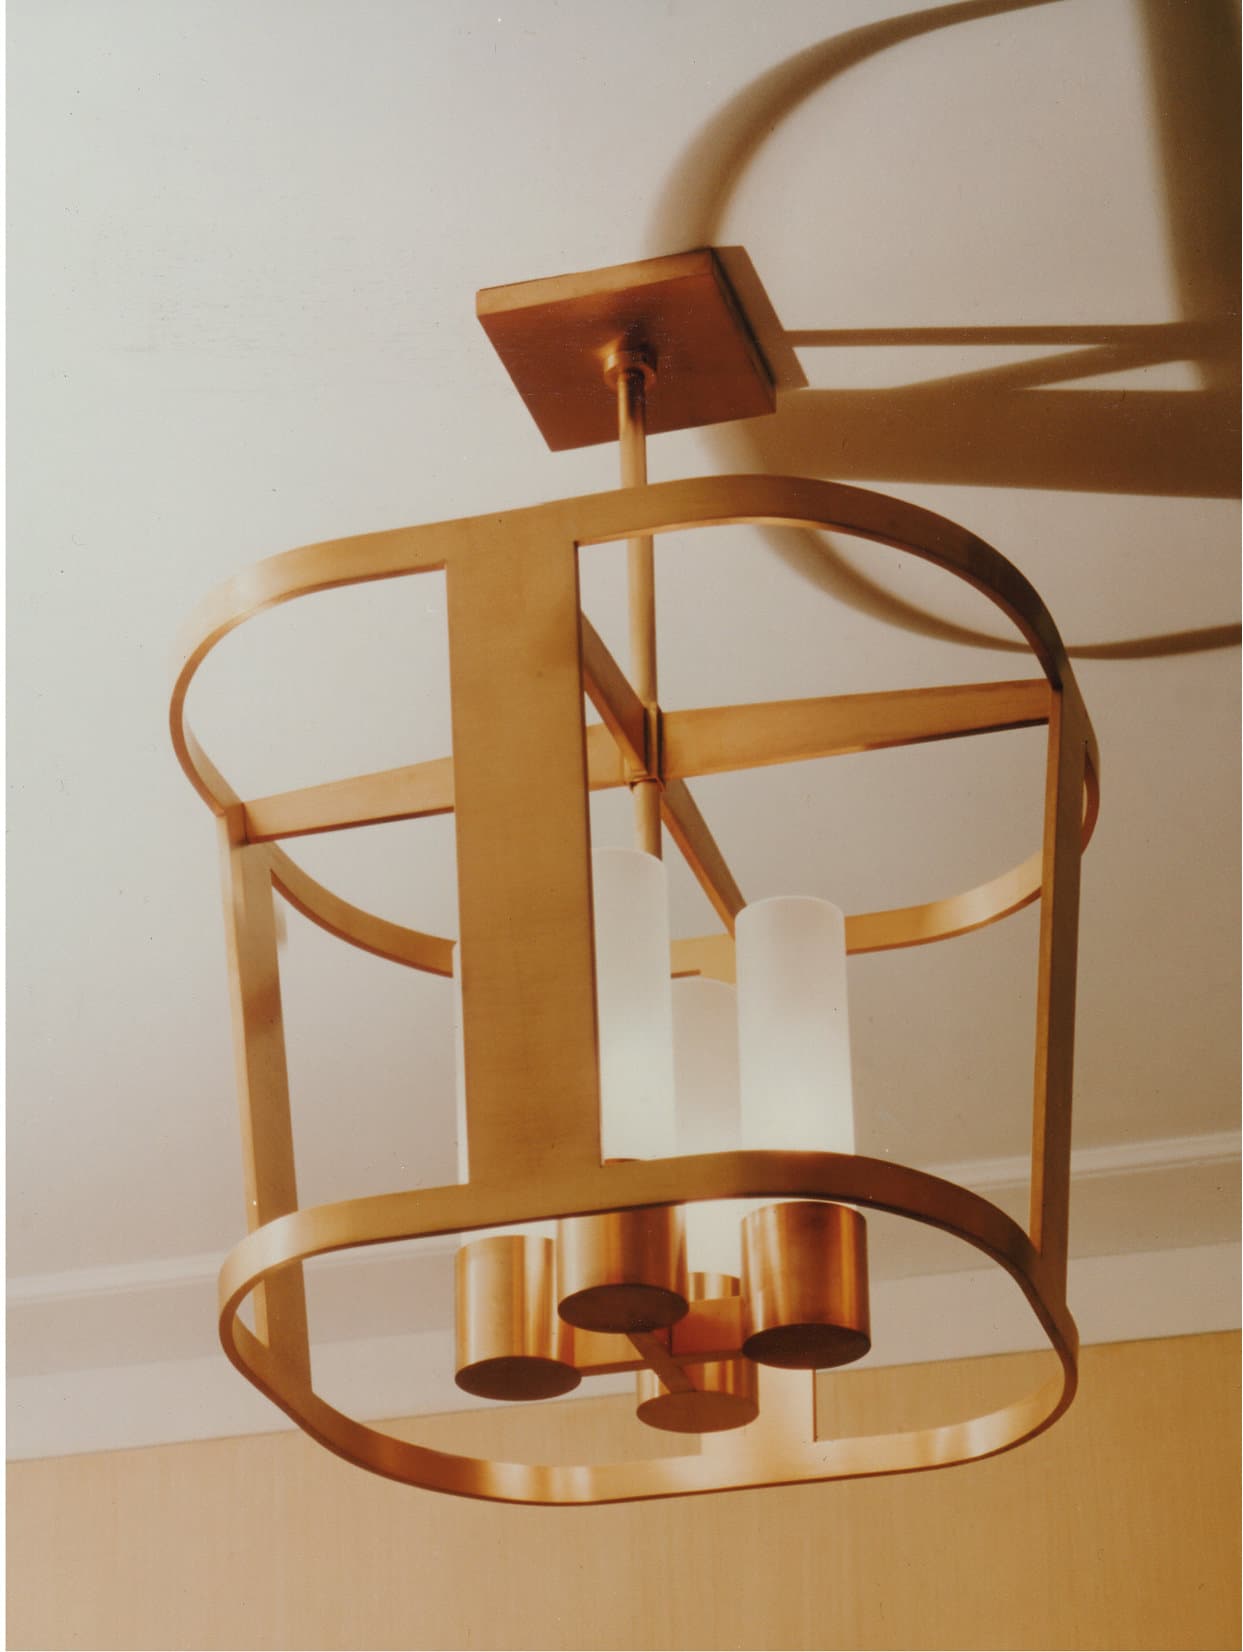 Custom pendant light | Rodman Paul Architects